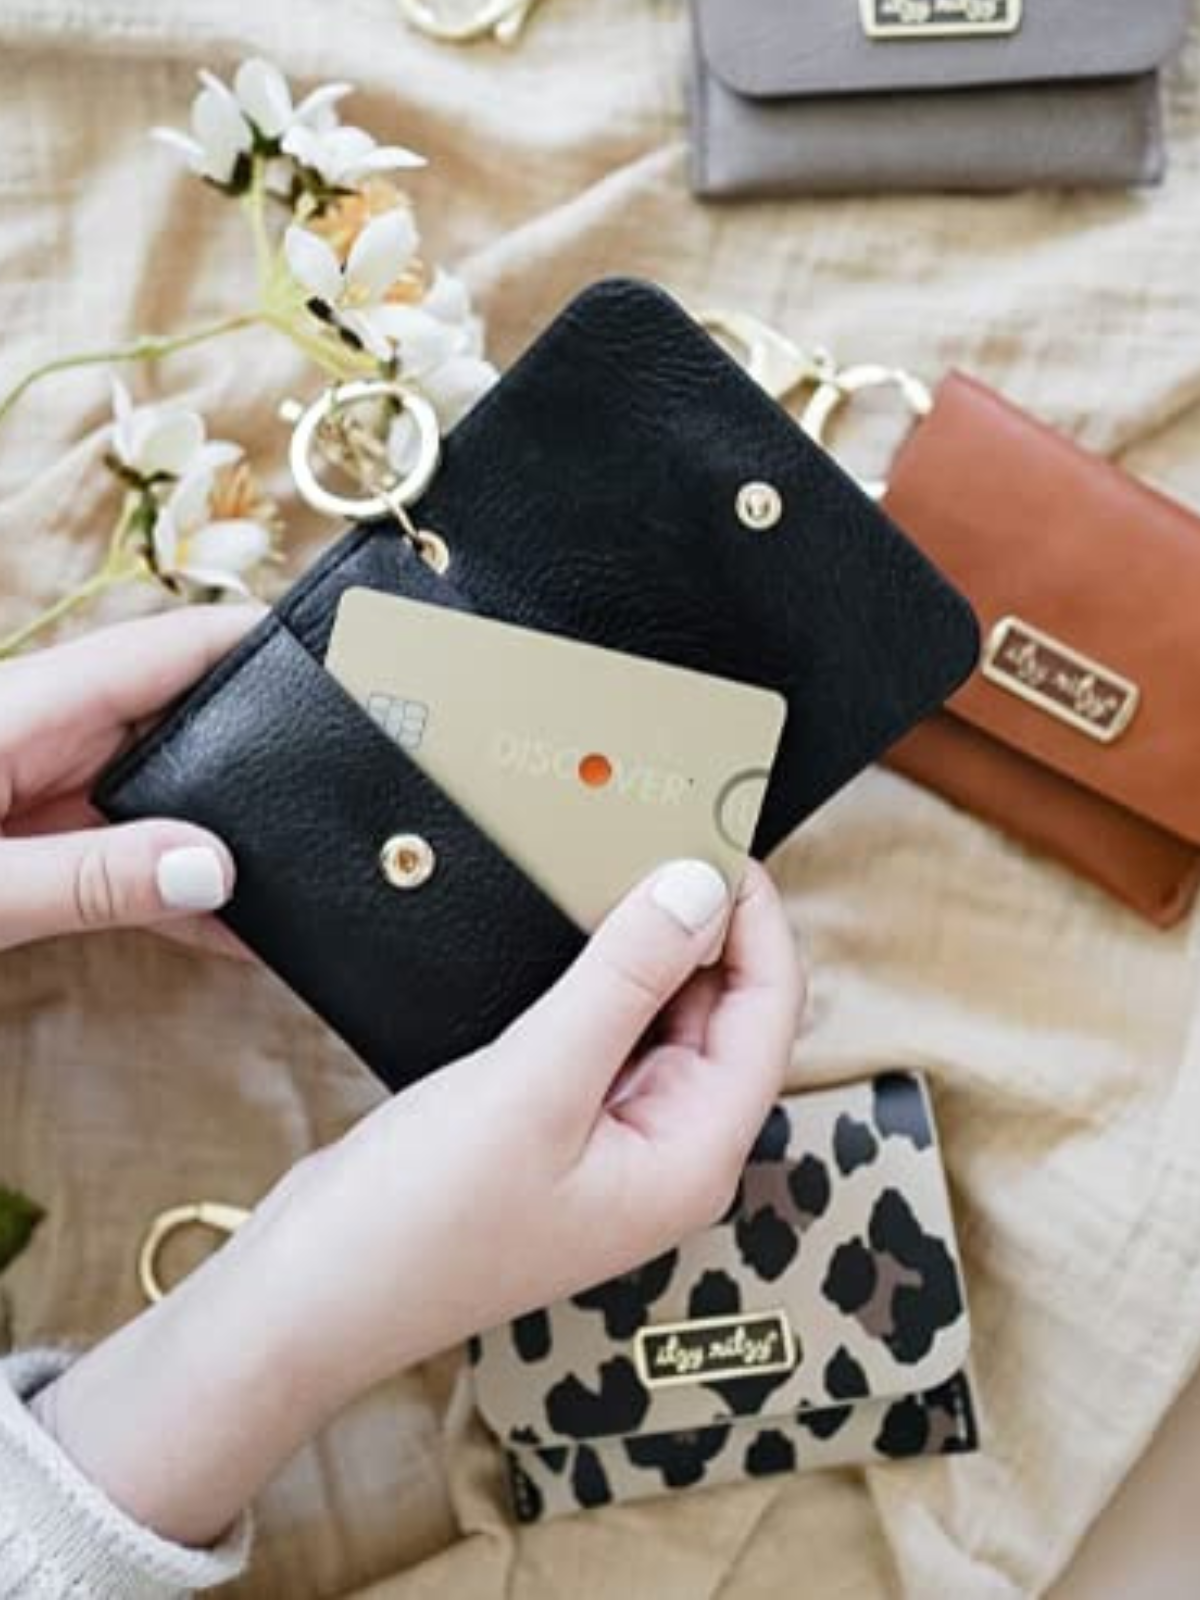 Itzy Mini Wallet Card Holder & Keychain Charm, Leopard